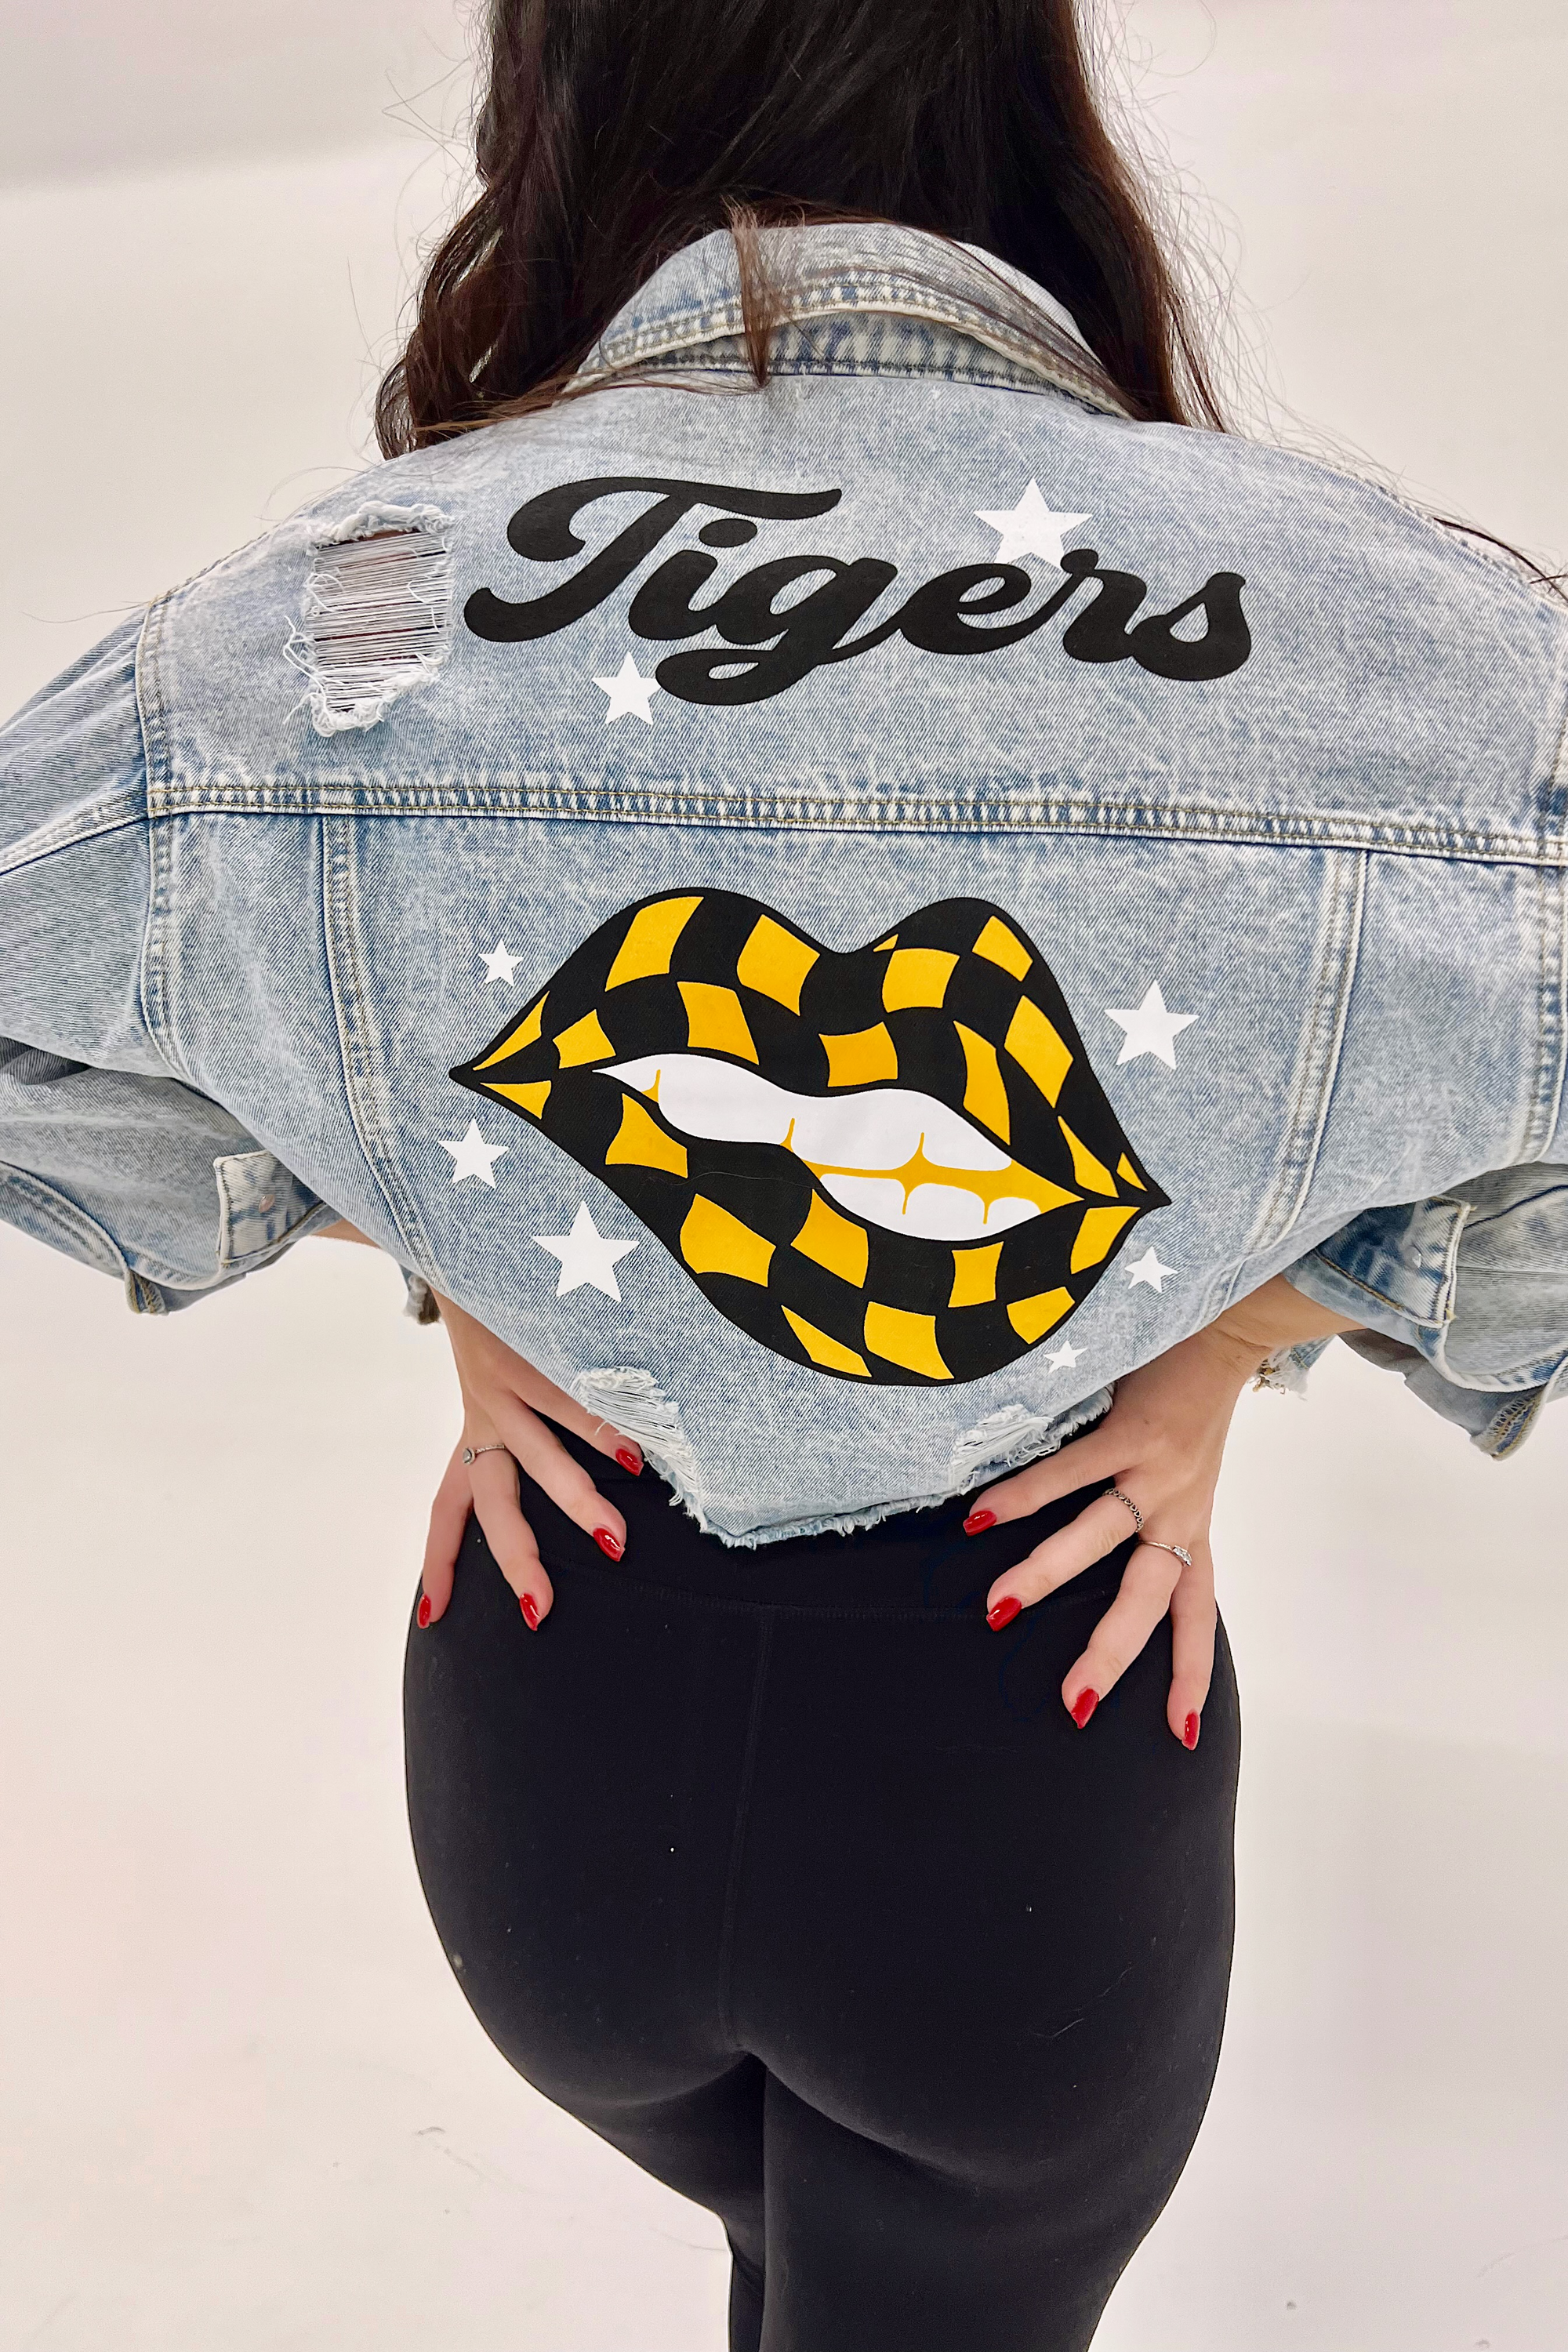 Tigers (Black/Gold) Checkered Lips Print Denim Jacket-Sale